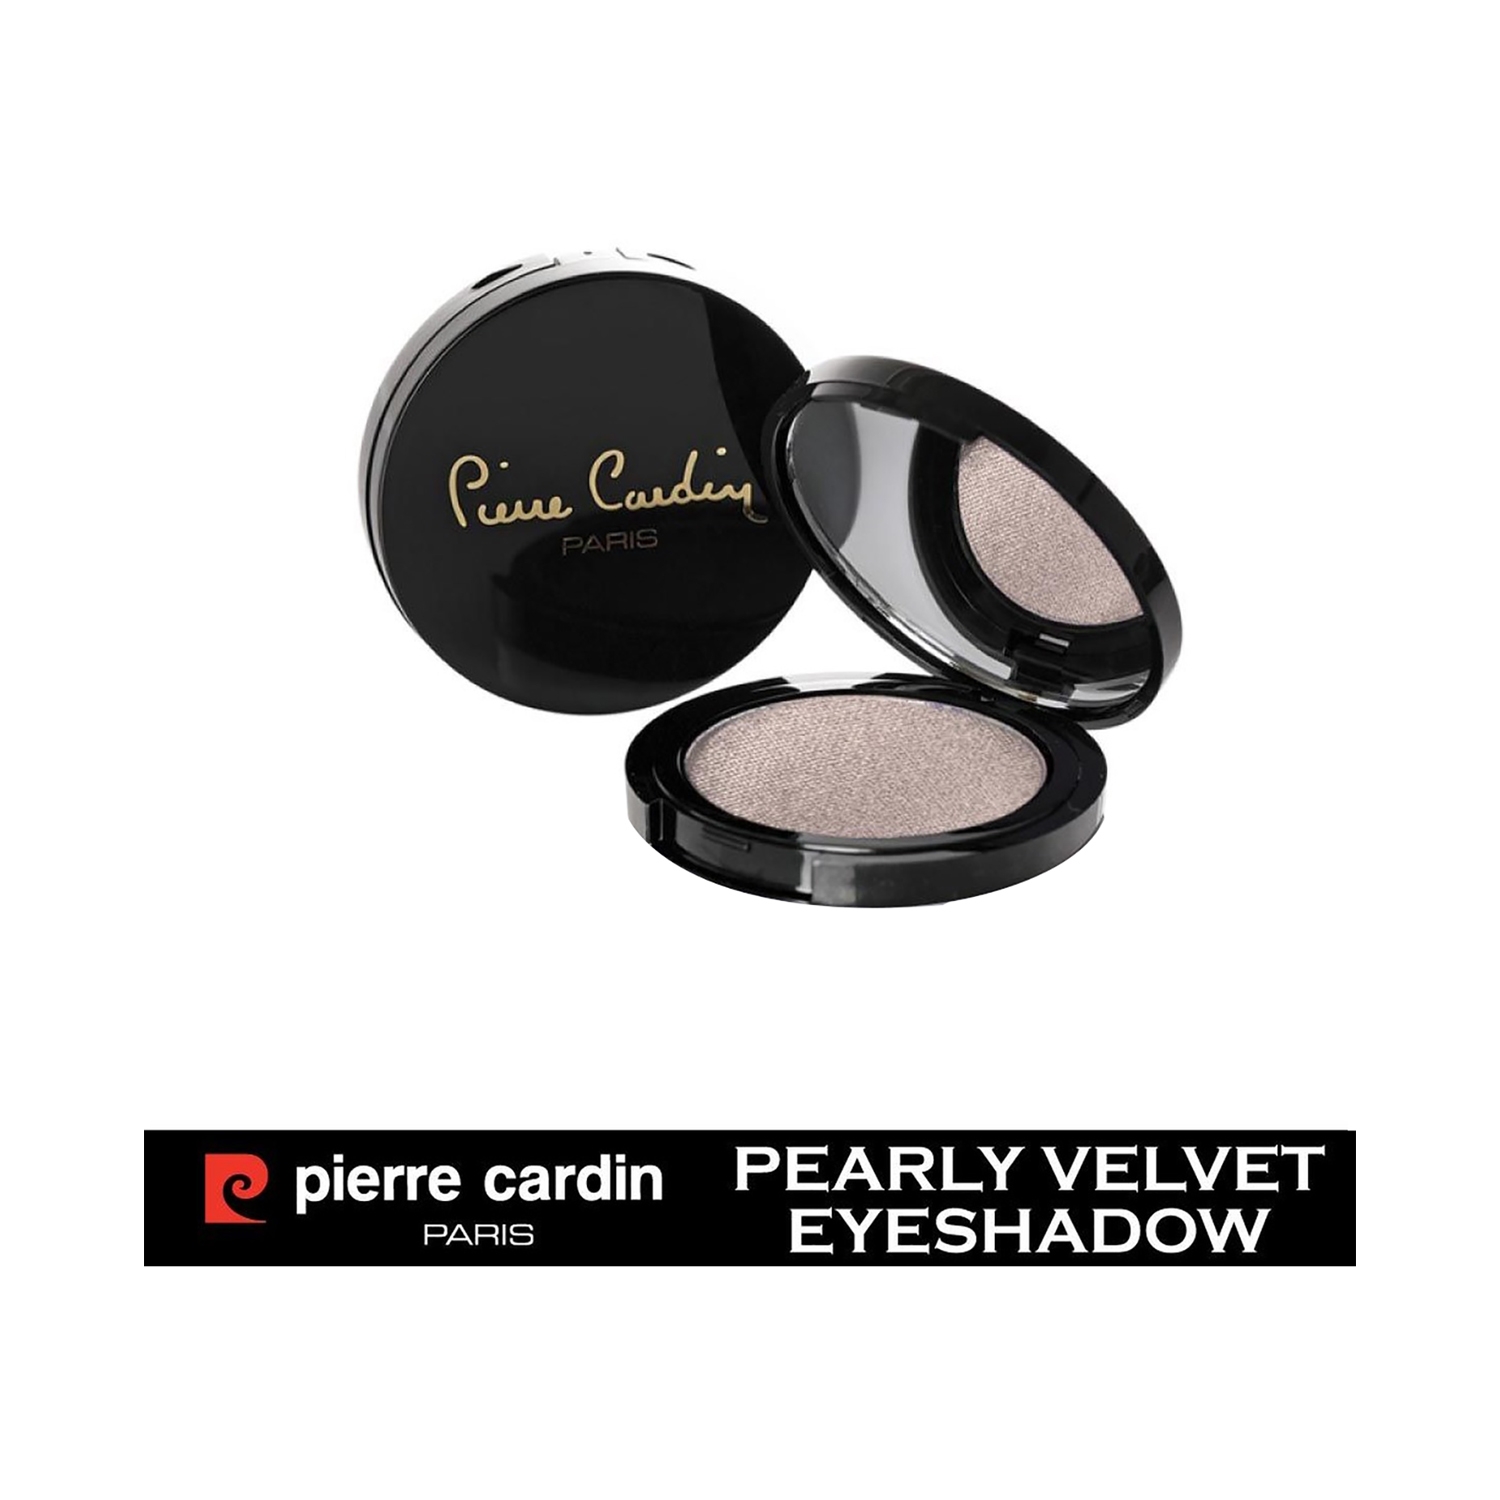 Pierre Cardin Paris | Pierre Cardin Paris Pearly Velvet Eye Shadow - 980 Taupe (4g)